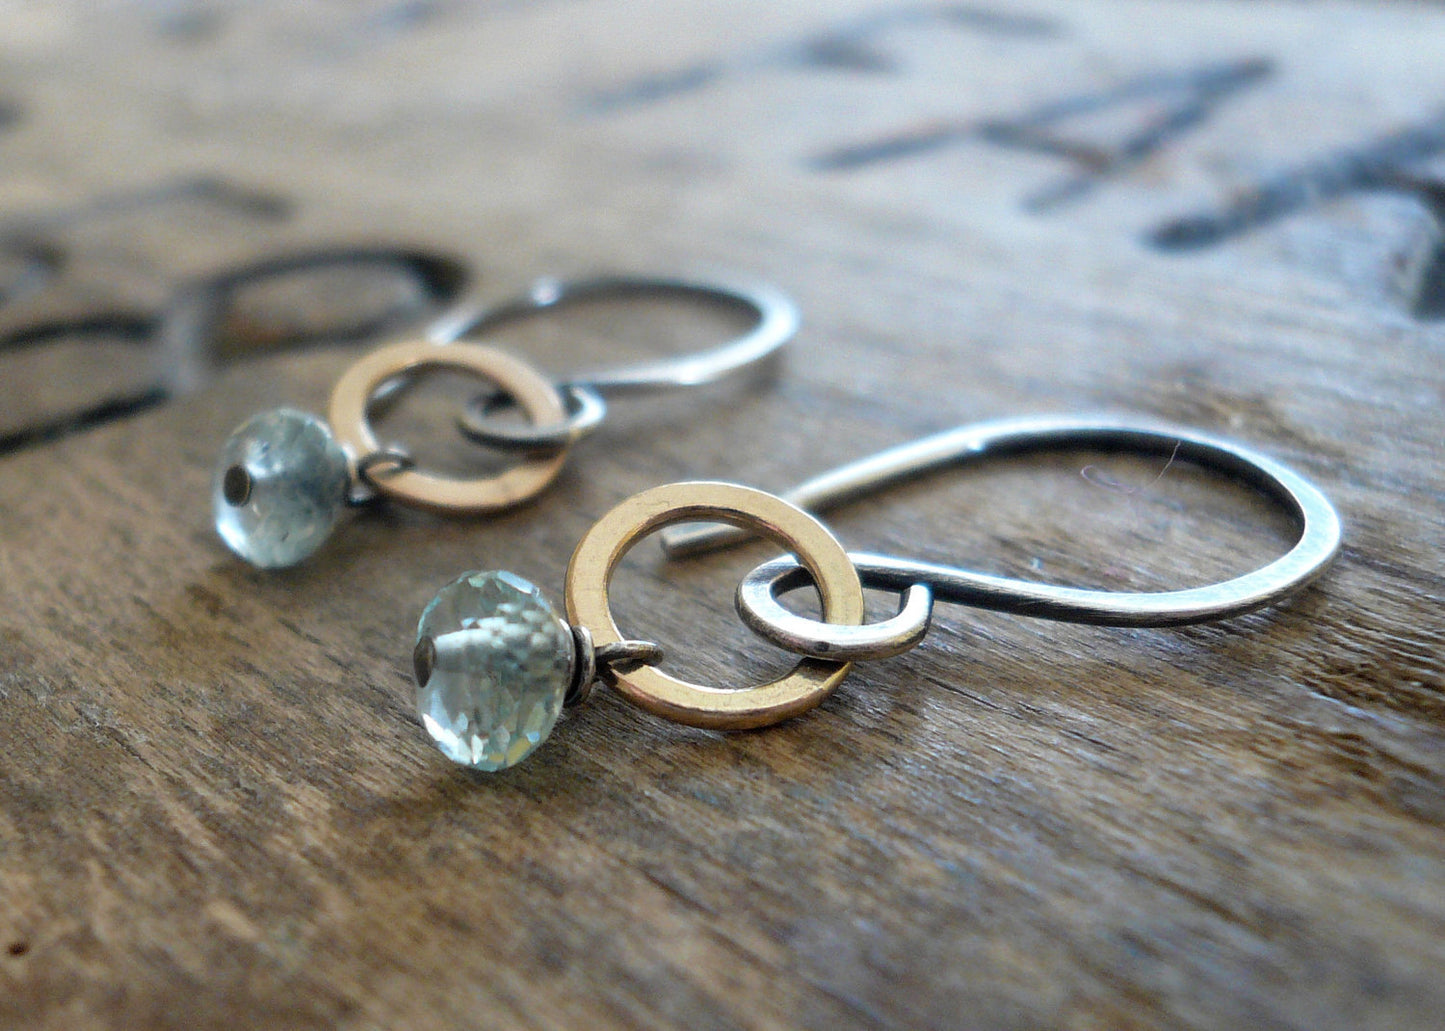 Twinkle Earrings Wonderland Collection - Aquamarine. Oxidized Sterling Silver. 14kt Goldfill dangle earrings. March Birthstone